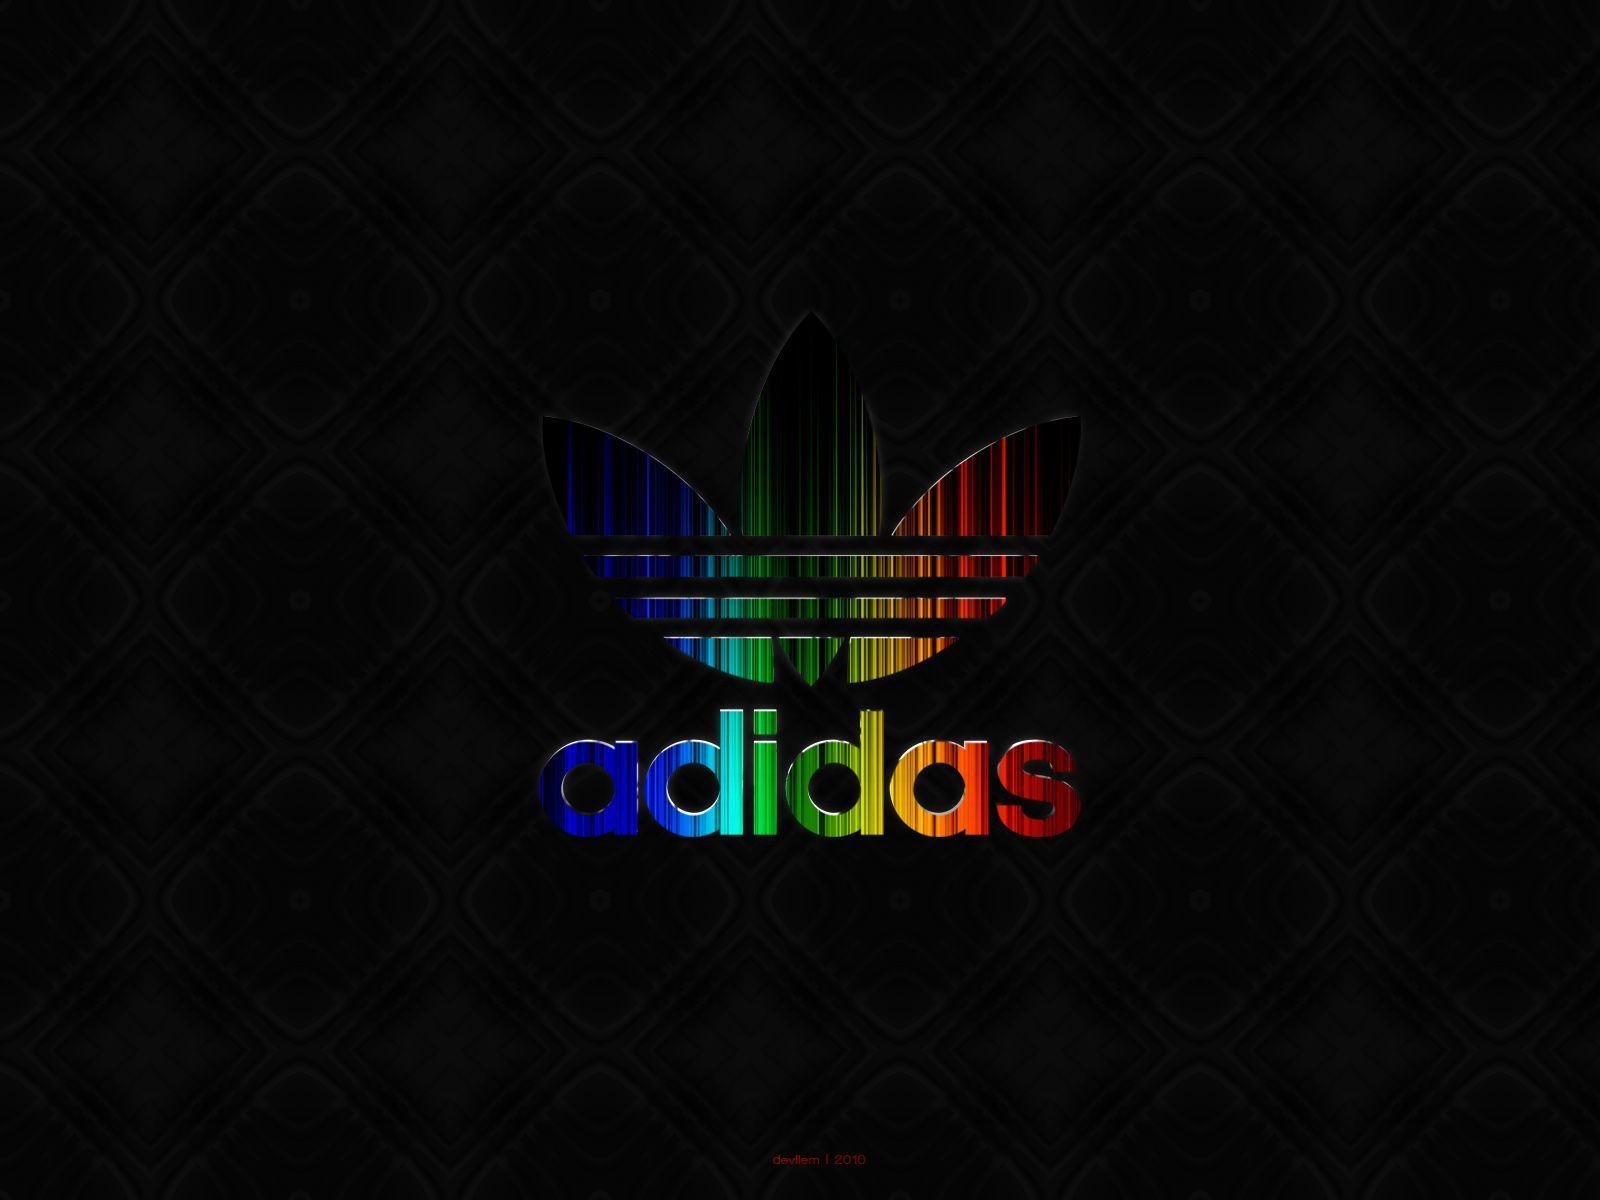 adidas wallpaper 1080p